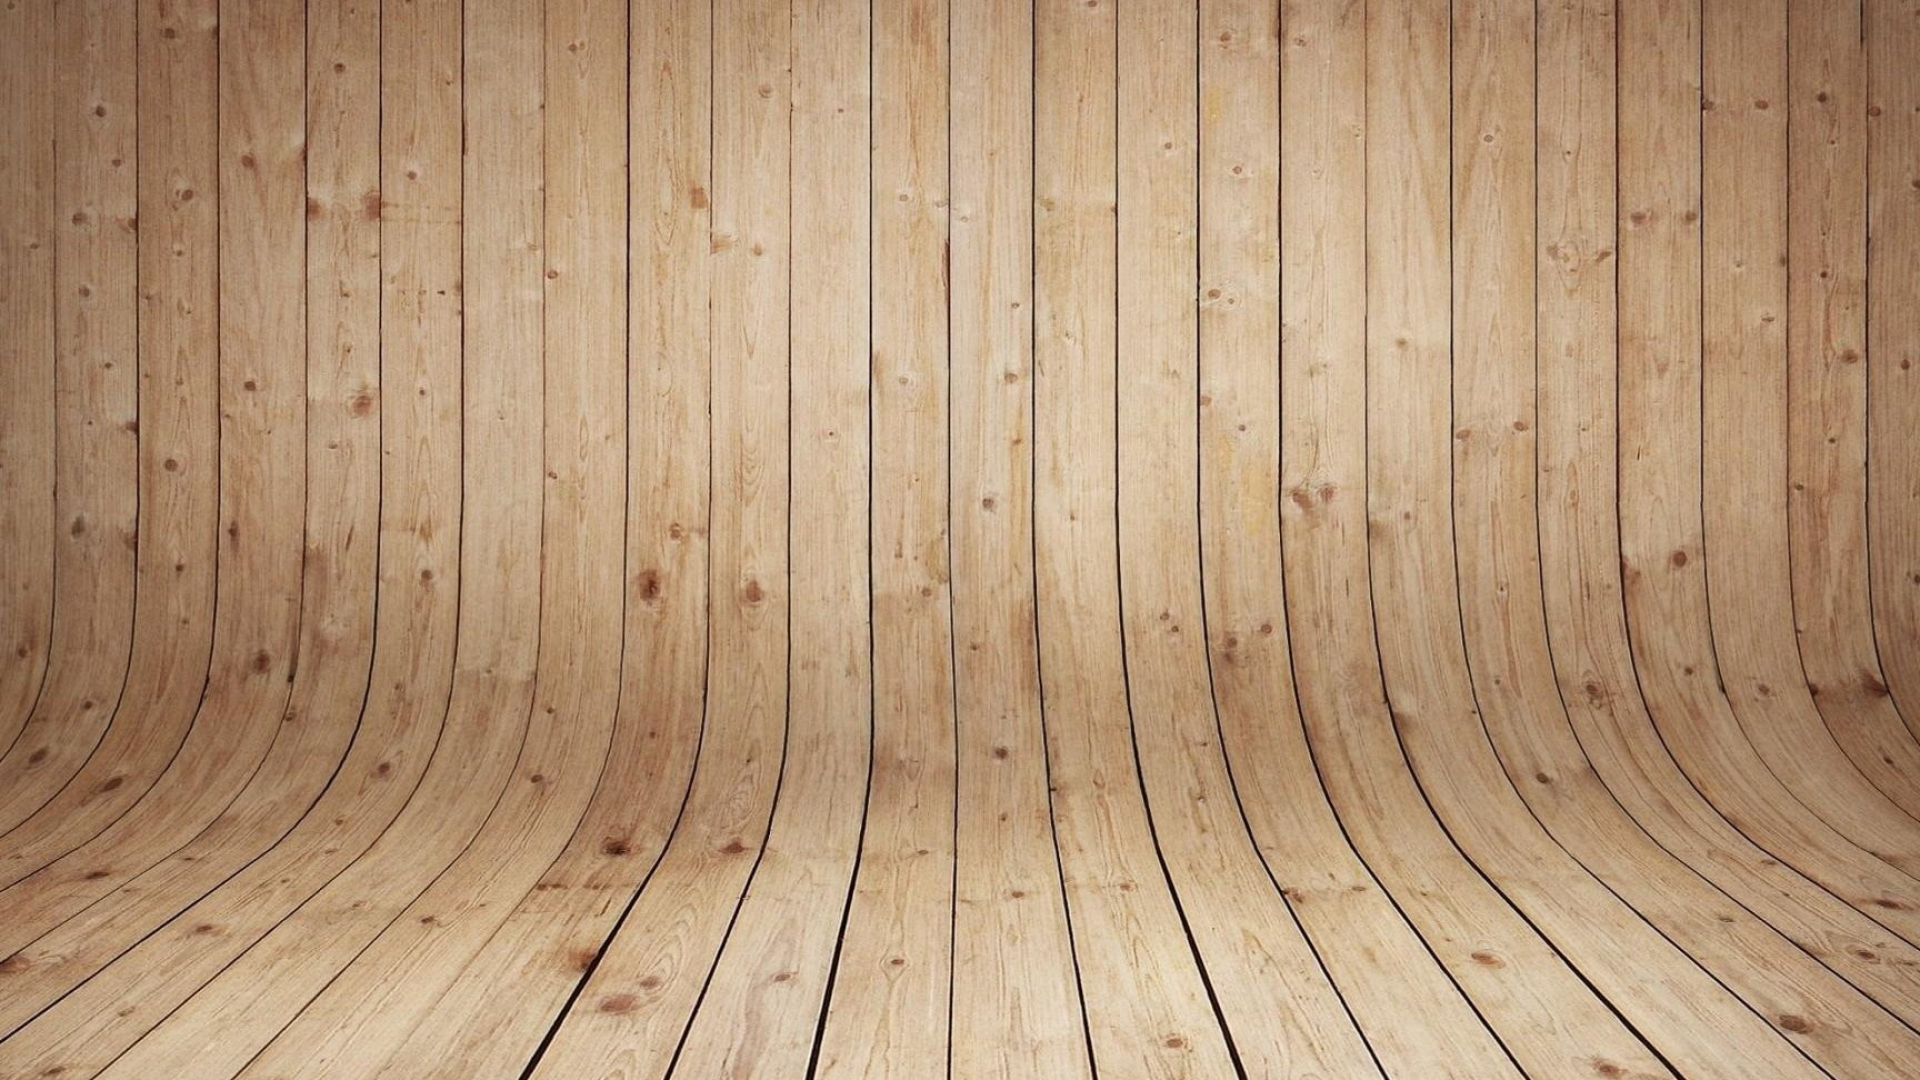 Wood floor wallpapers, Elegant wood floors, Wood floor backgrounds, Natural beauty, 1920x1080 Full HD Desktop